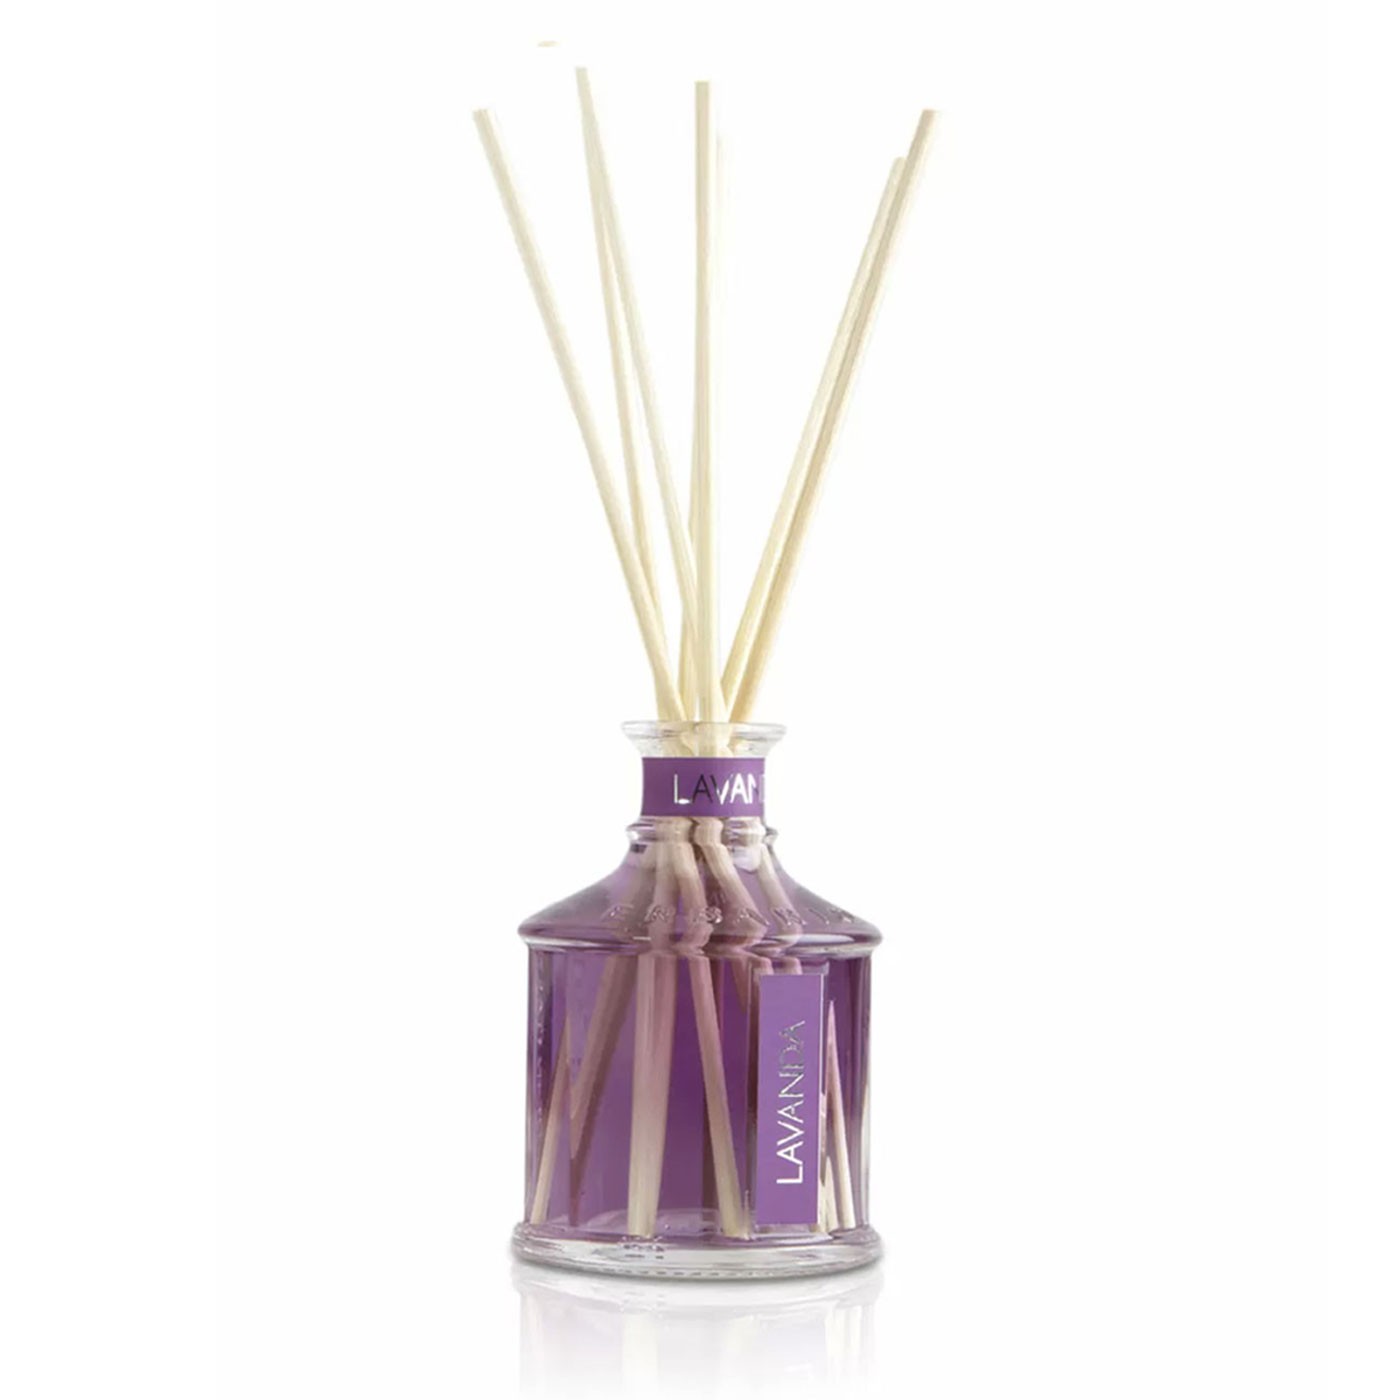 Lavender Fragrance Diffuser 34 oz - Erbario Toscano | Eataly.com